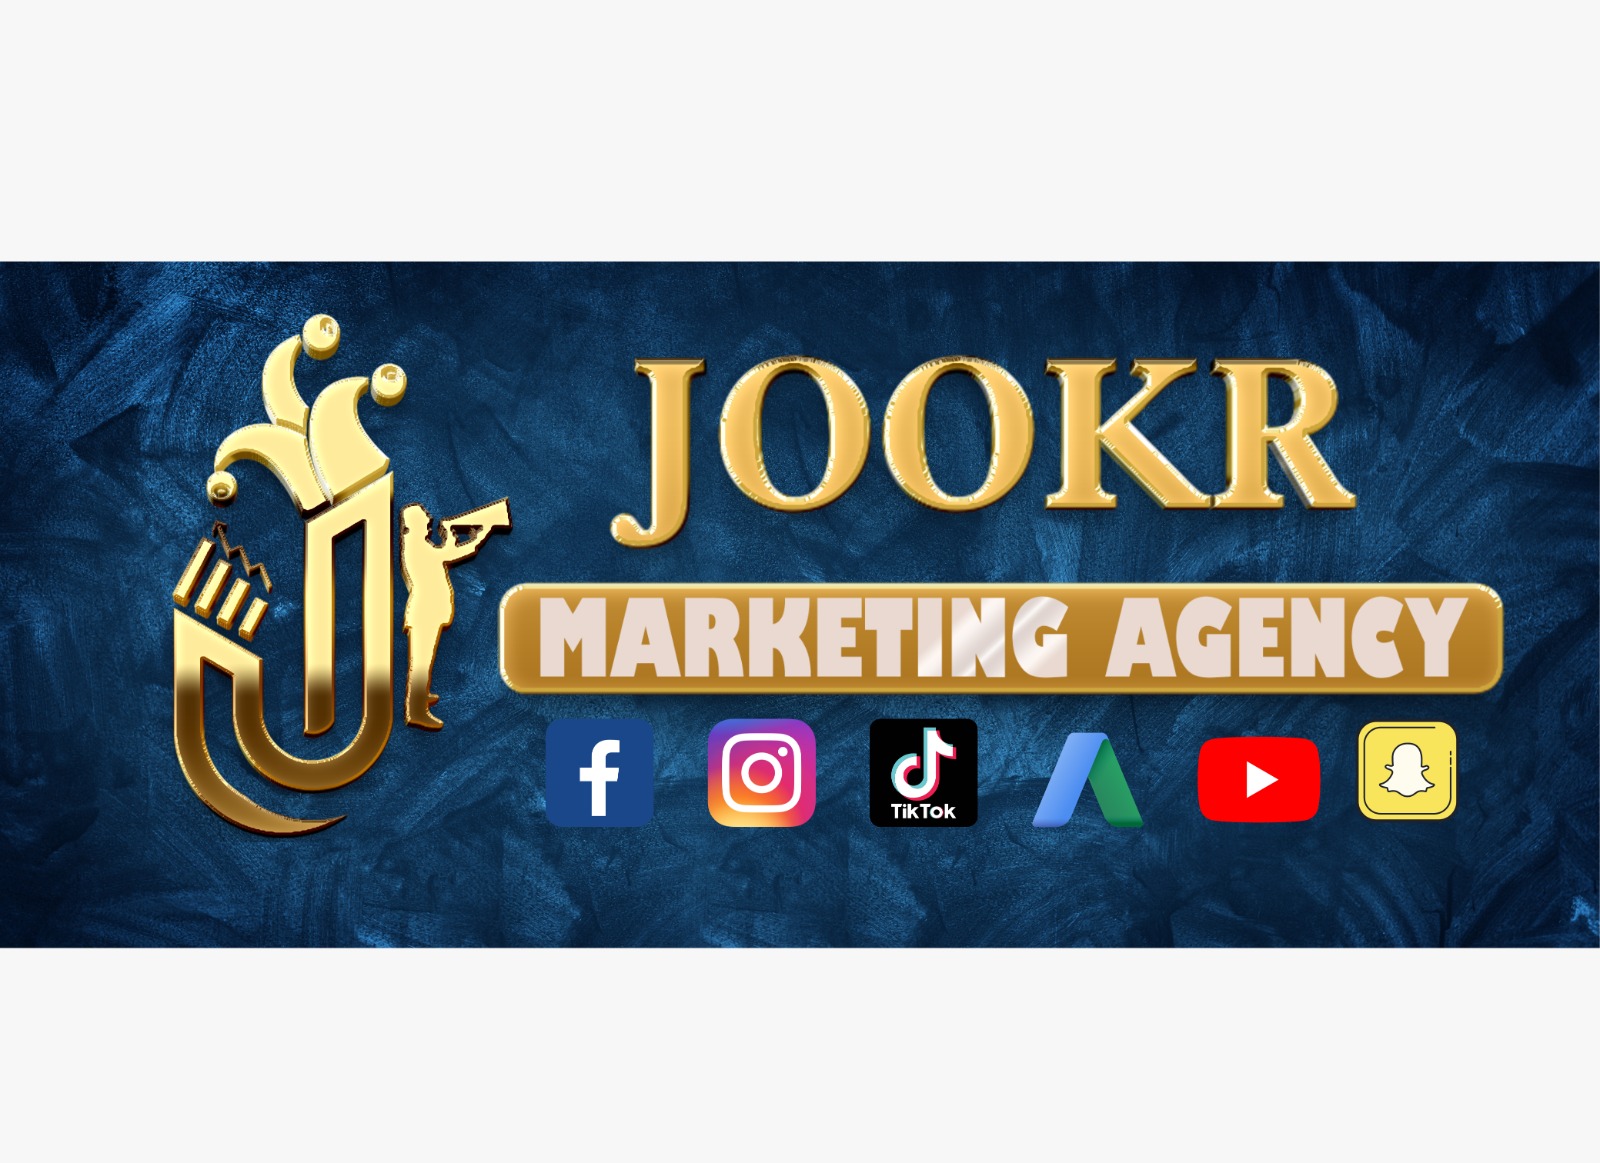 Jooker marketing agency